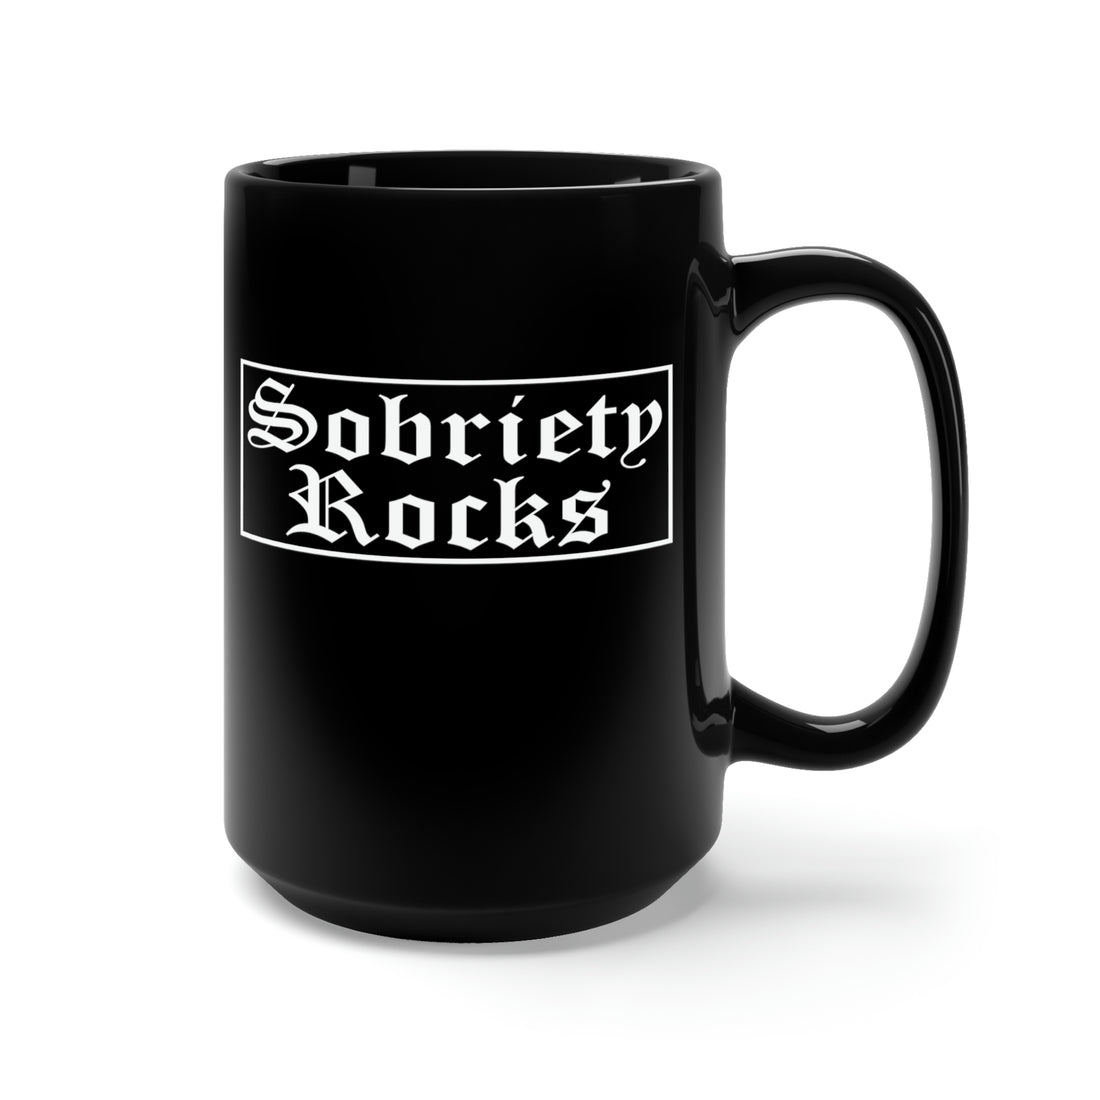 Sobriety Rocks - Large 15oz Black Mug